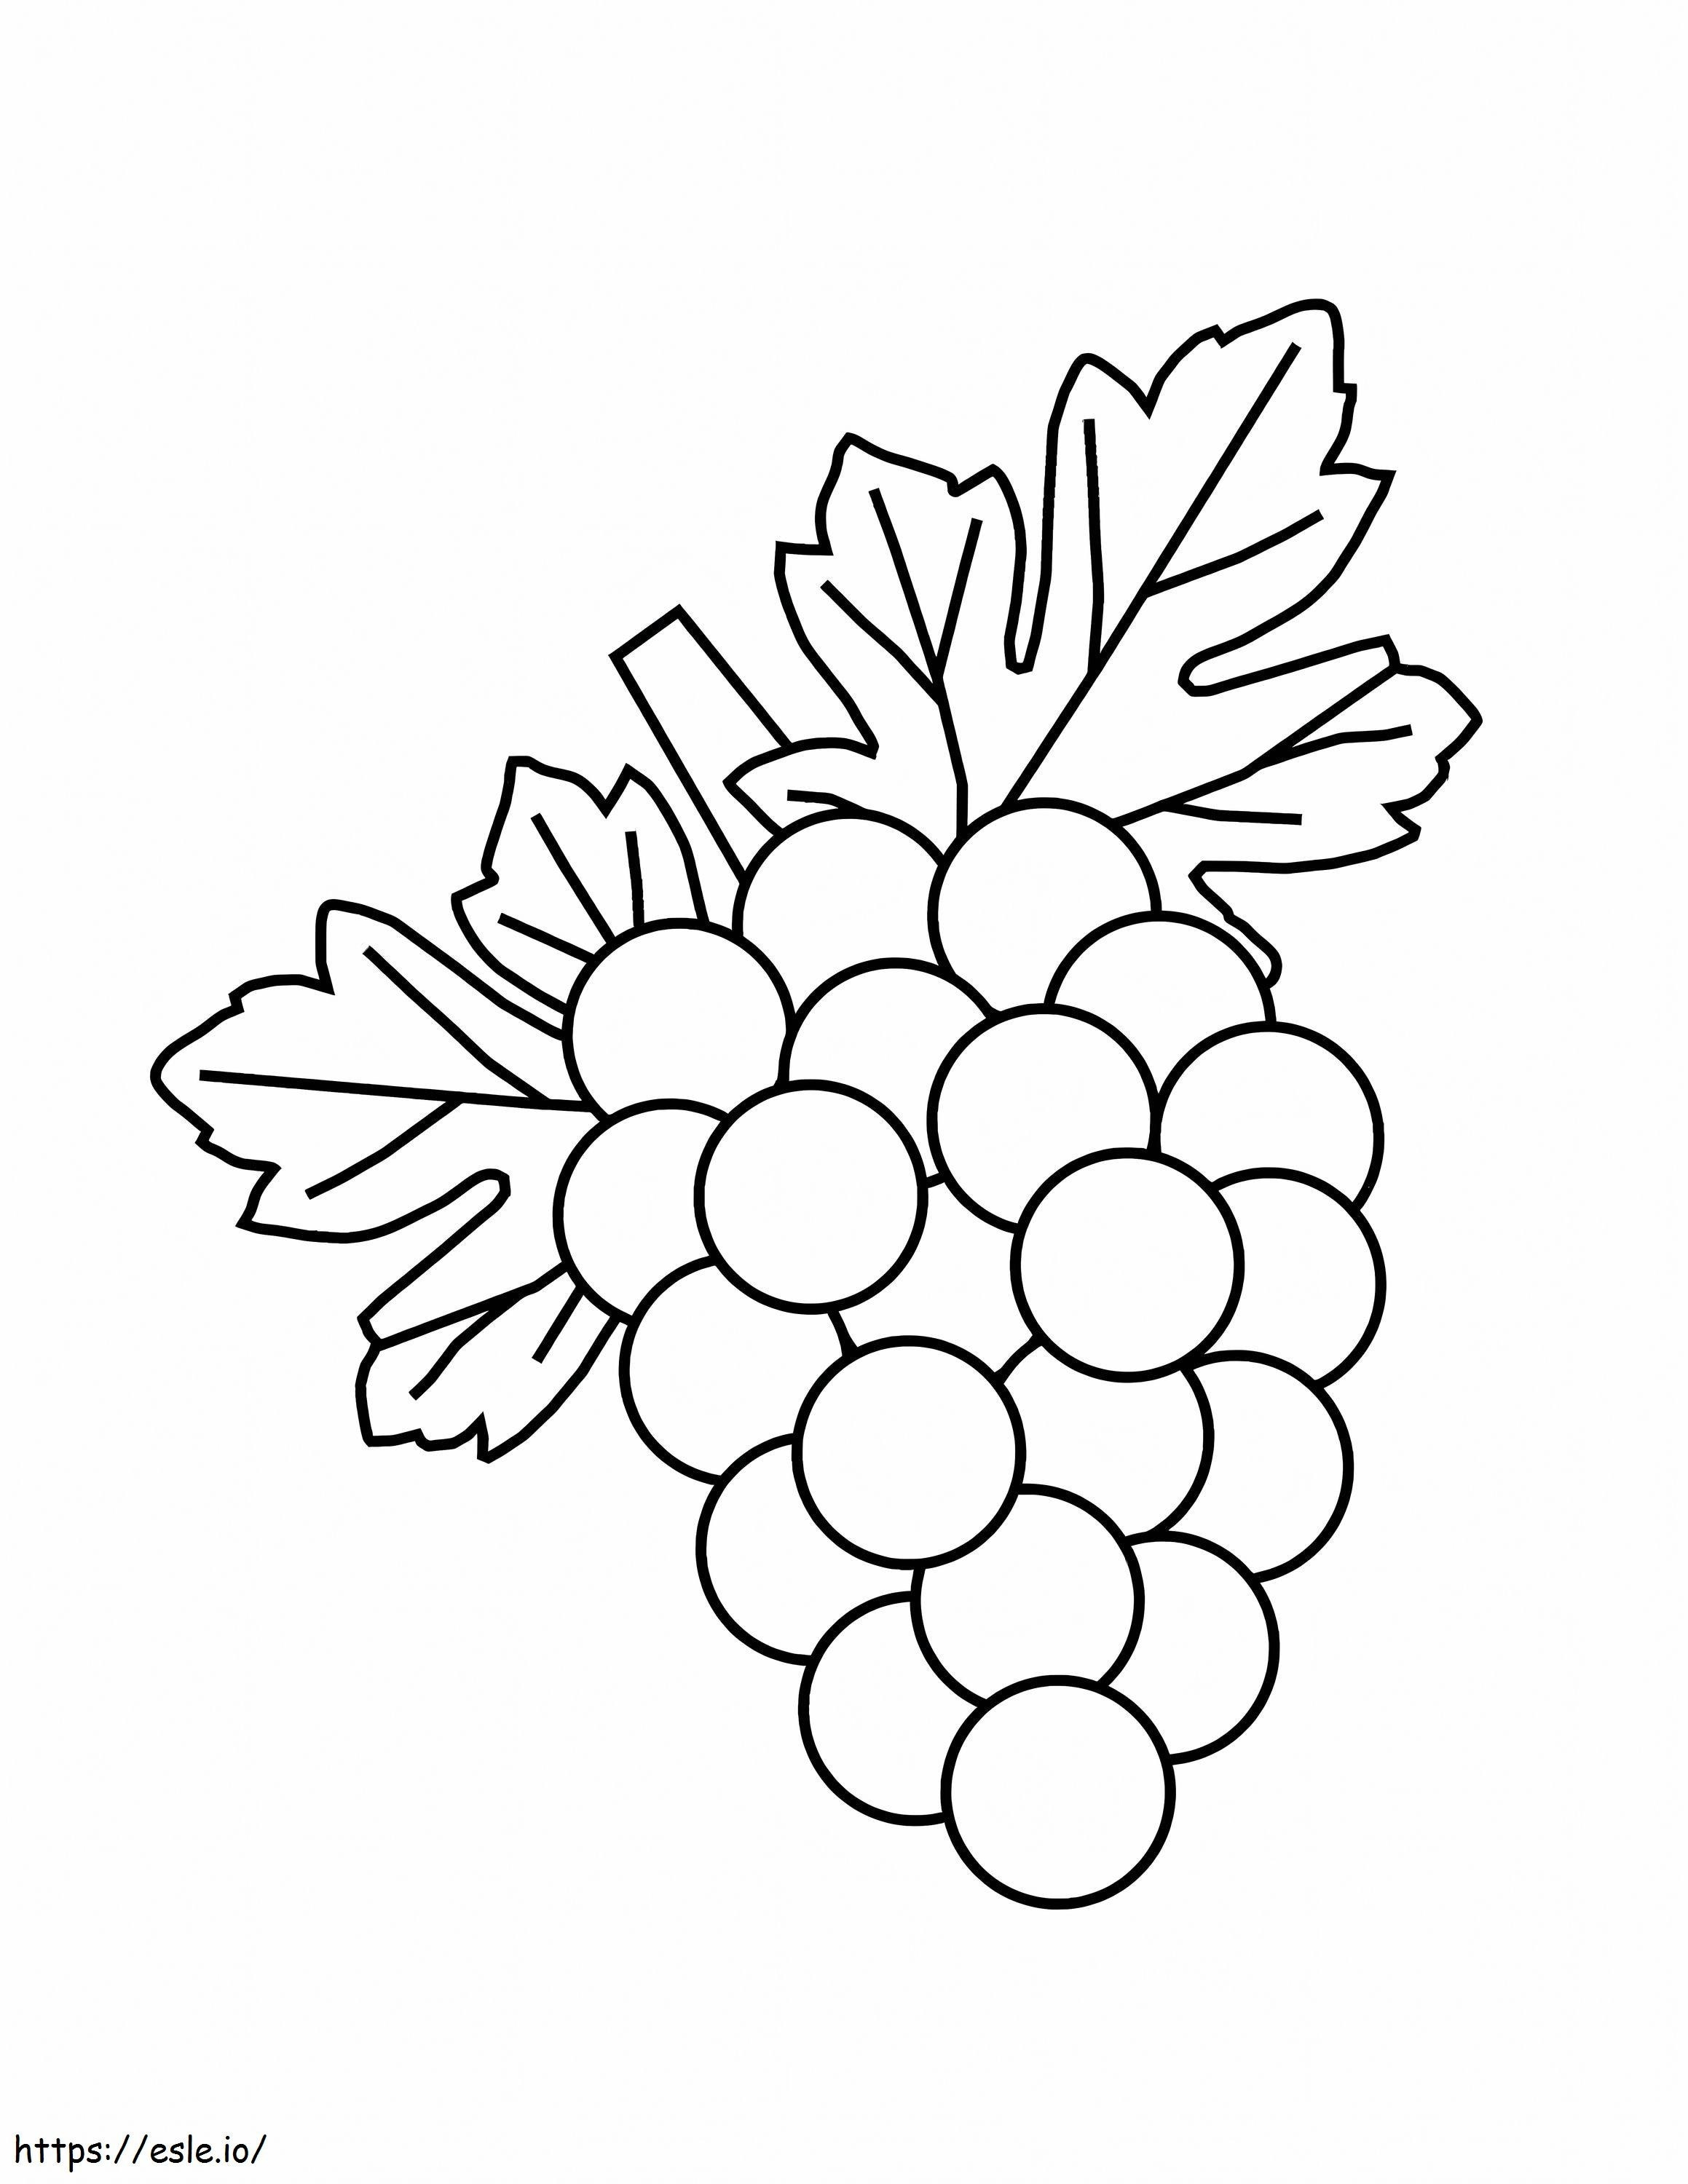 Normalne winogrona kolorowanka